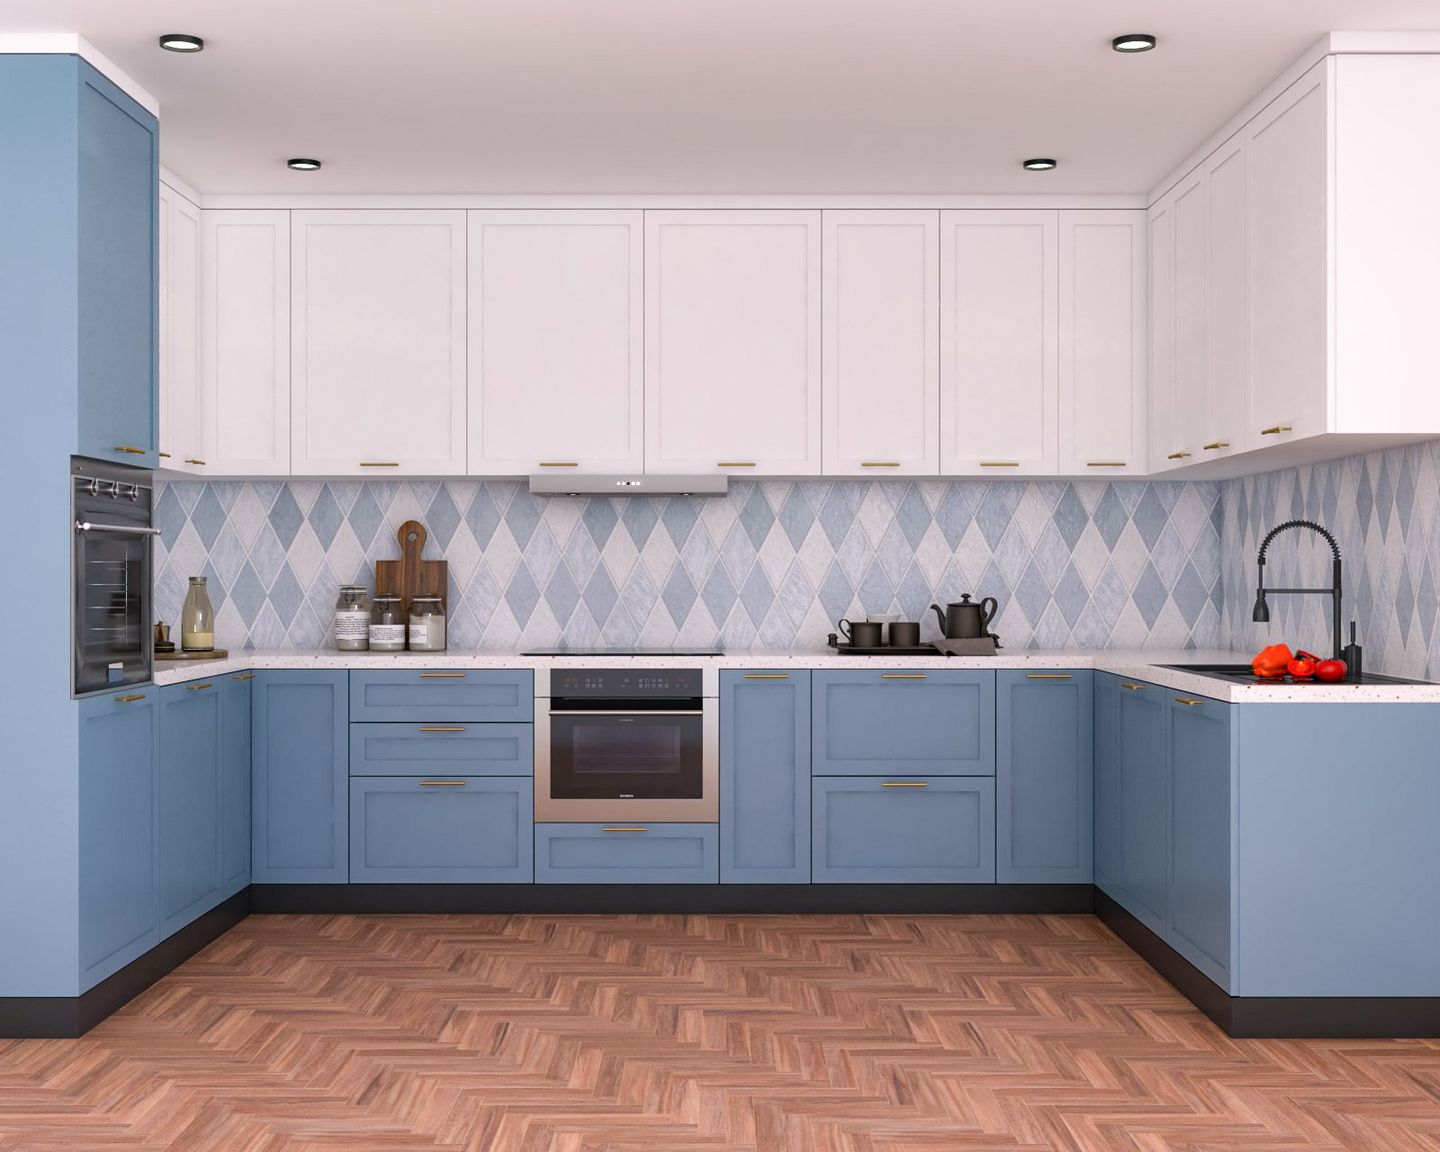 Blue And White U-Shaped Kitchen Design With Diamond-Patterned Kitchen Backsplash And White Quartz Countertop - Livspace